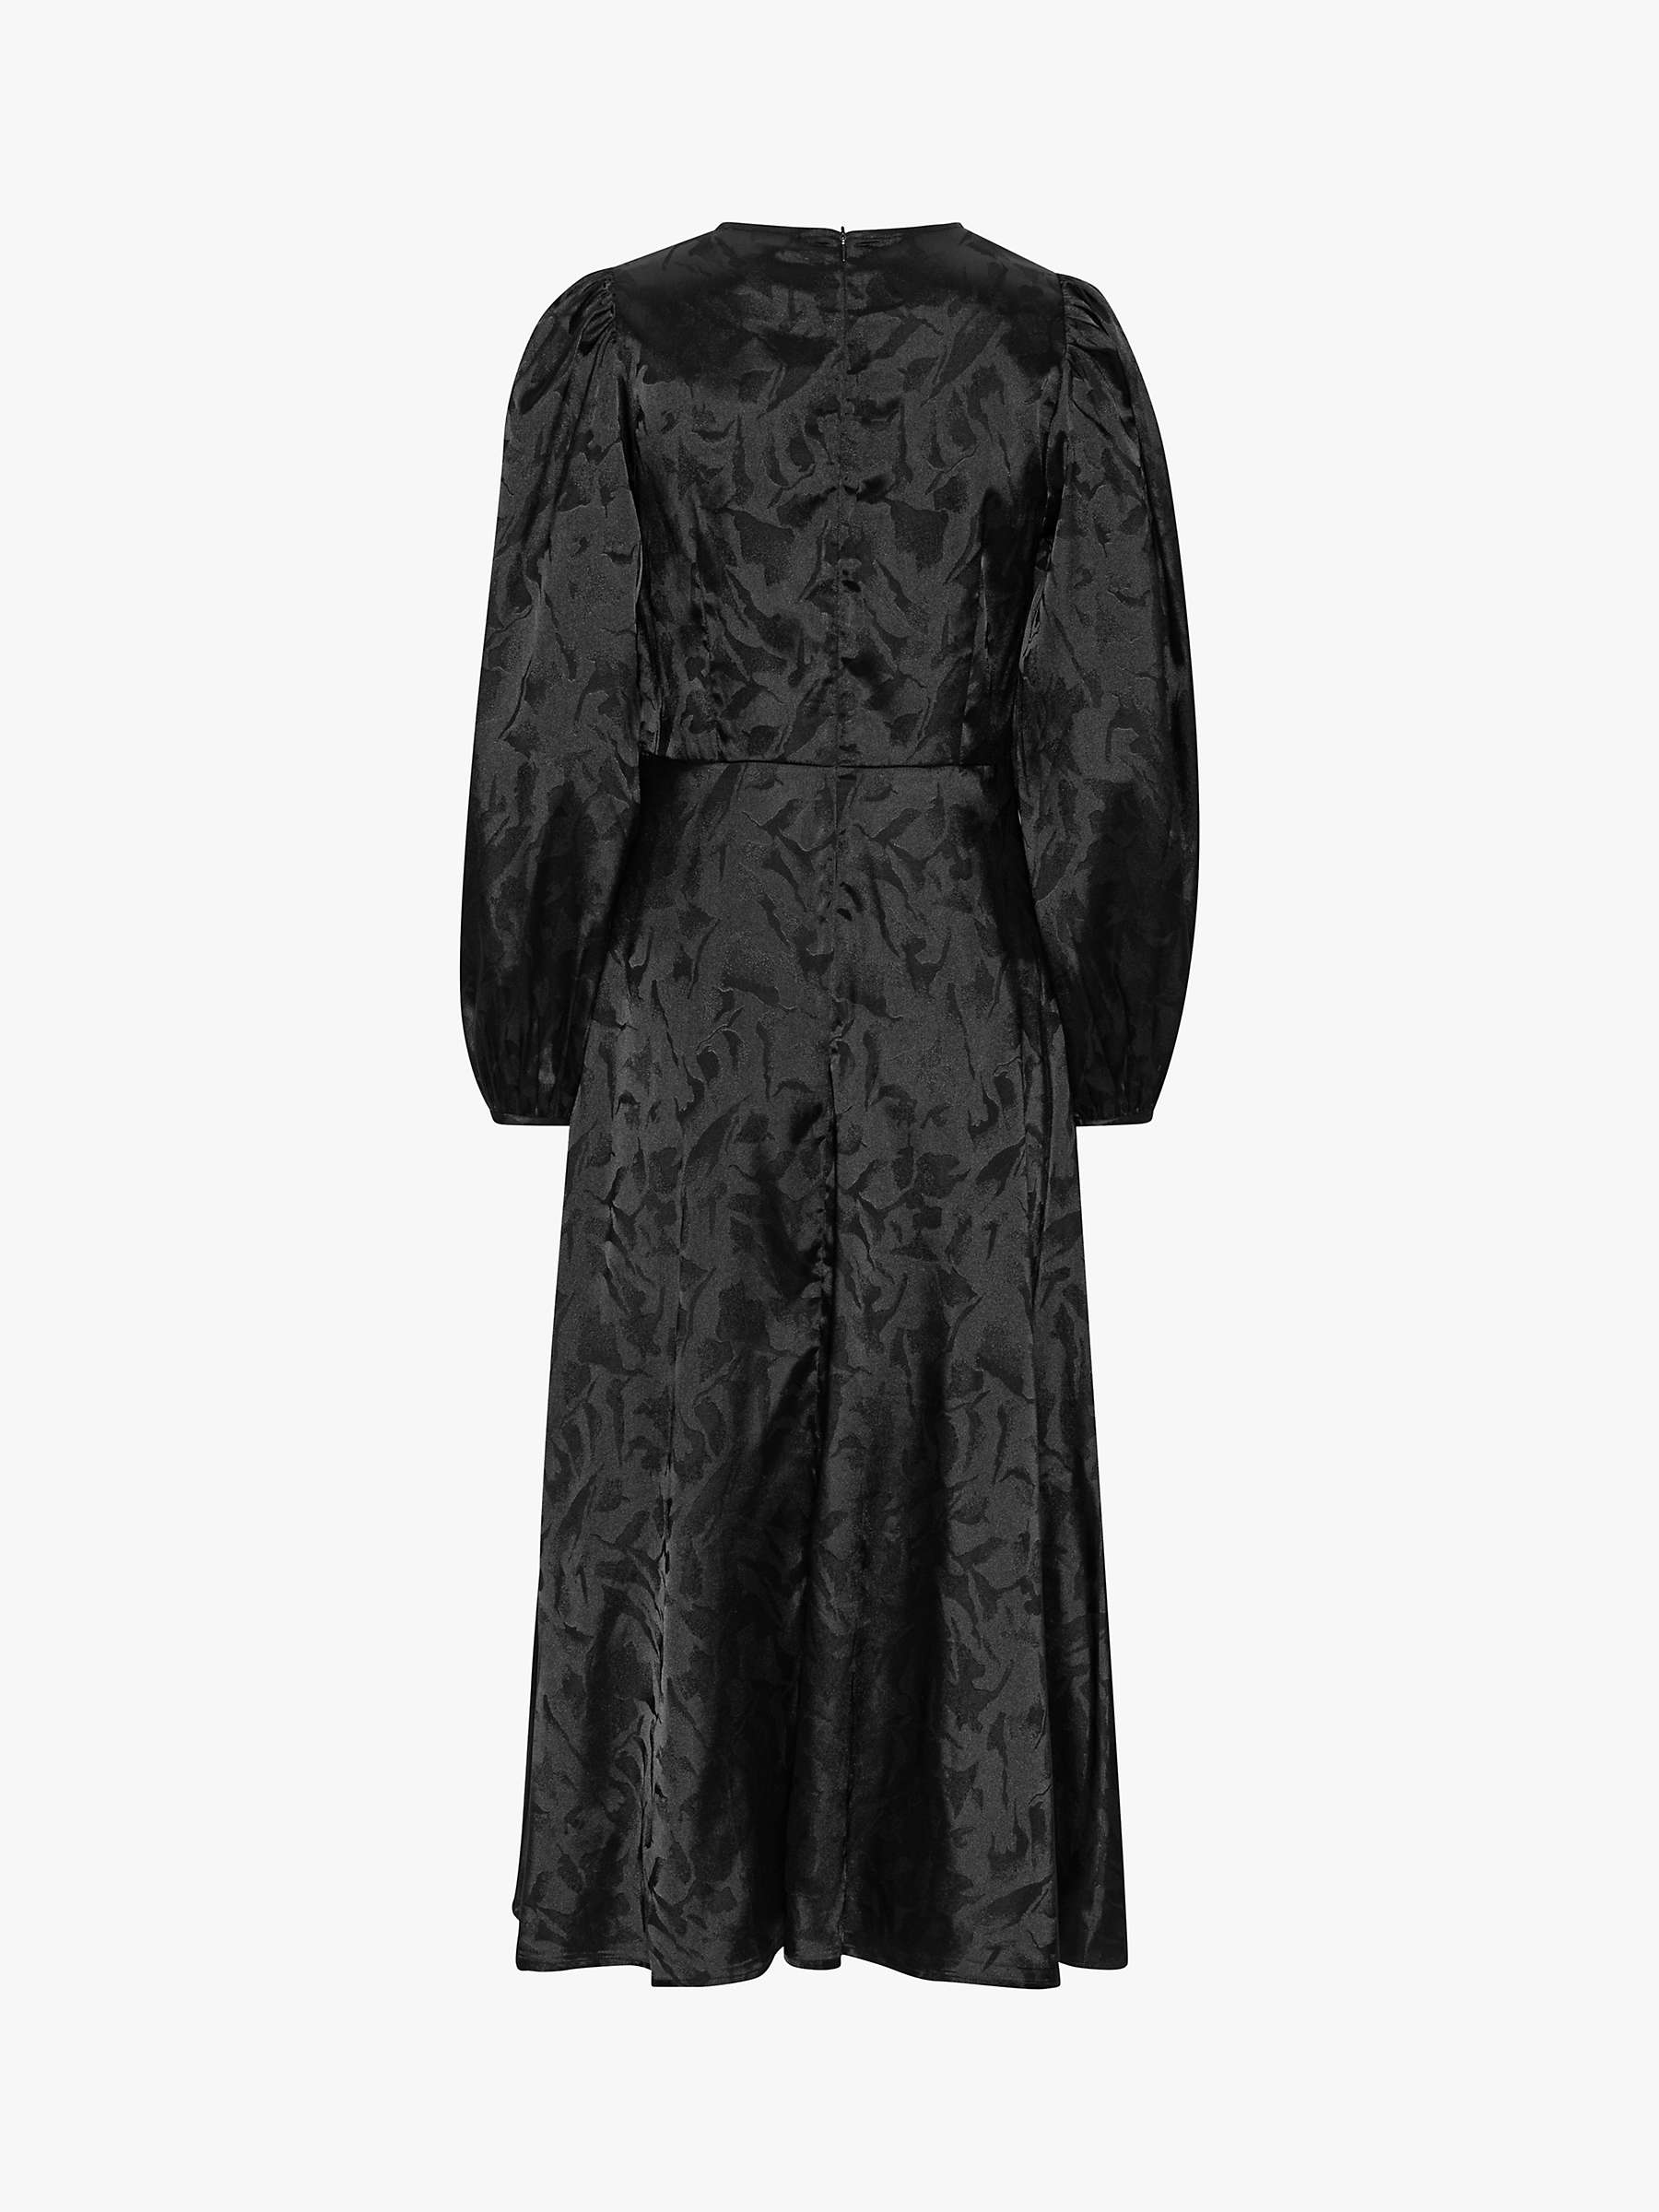 Buy A-VIEW Gina Midi Dress, Black Online at johnlewis.com